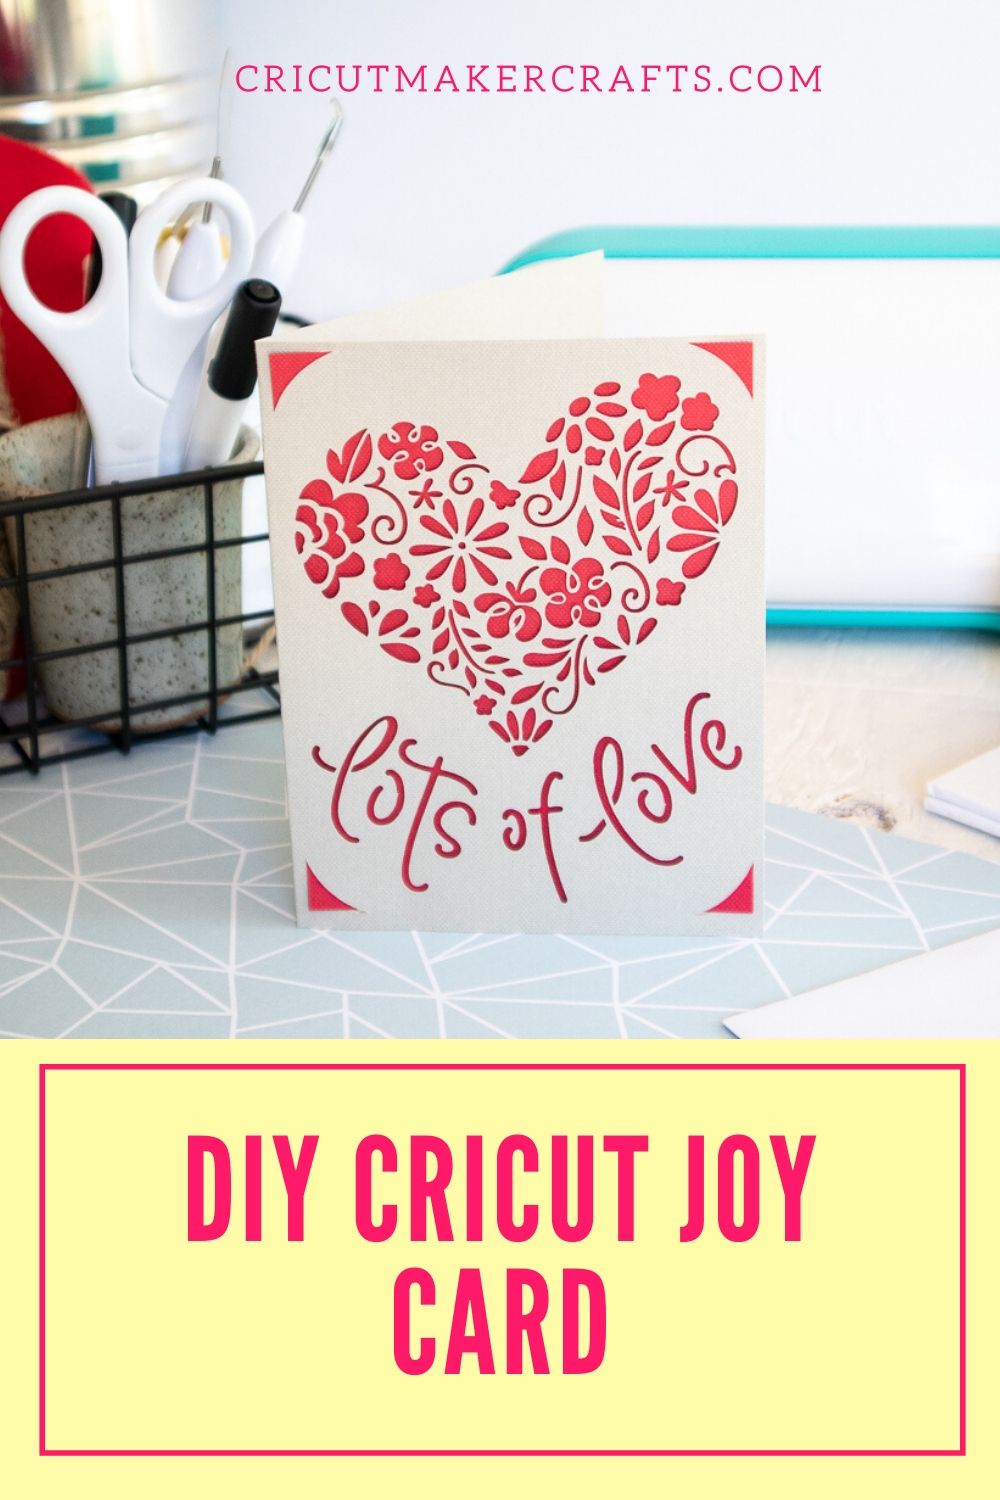 Cricut Joy Machine DIY Project Beginner Bundle with Insert Cards